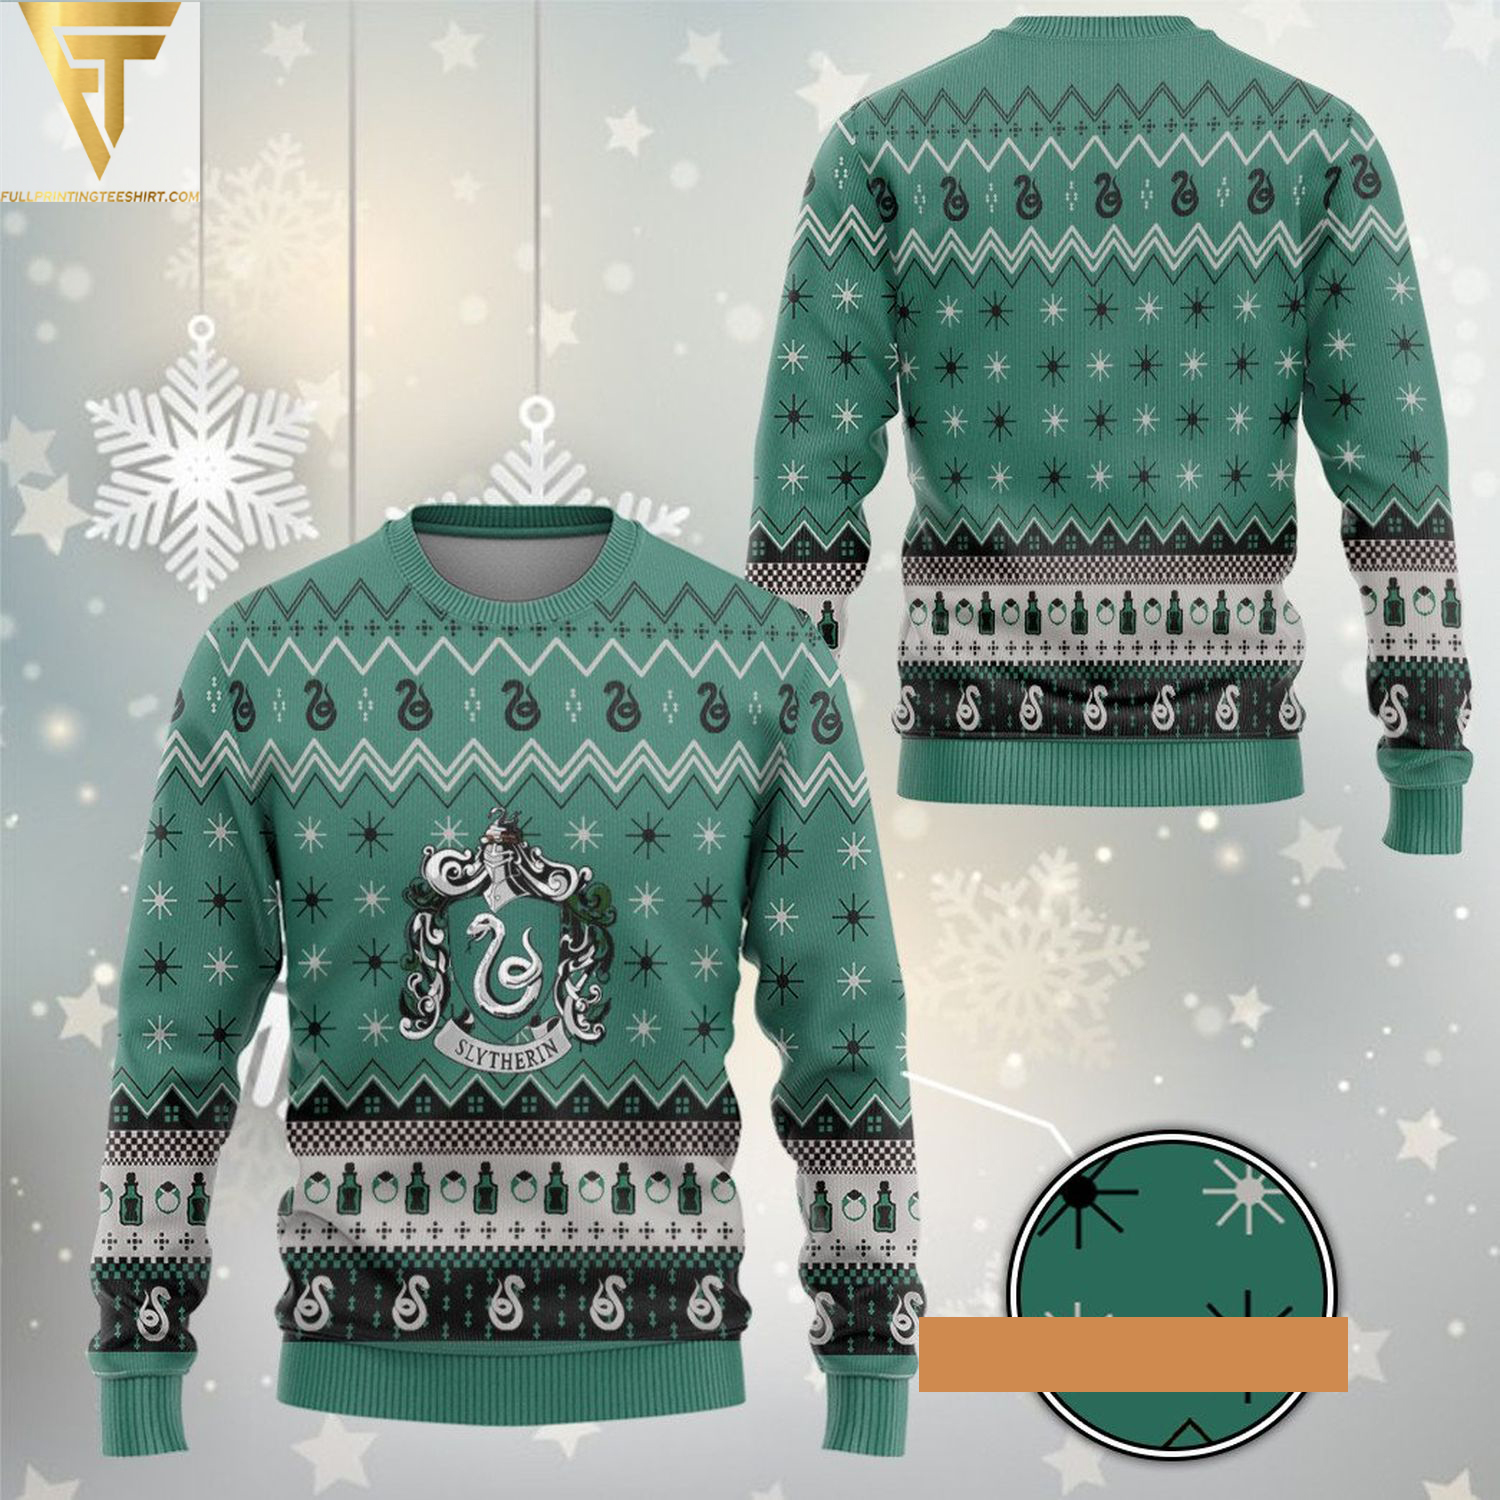 Harry potter slytherin holiday ugly christmas sweater - Copy (2)